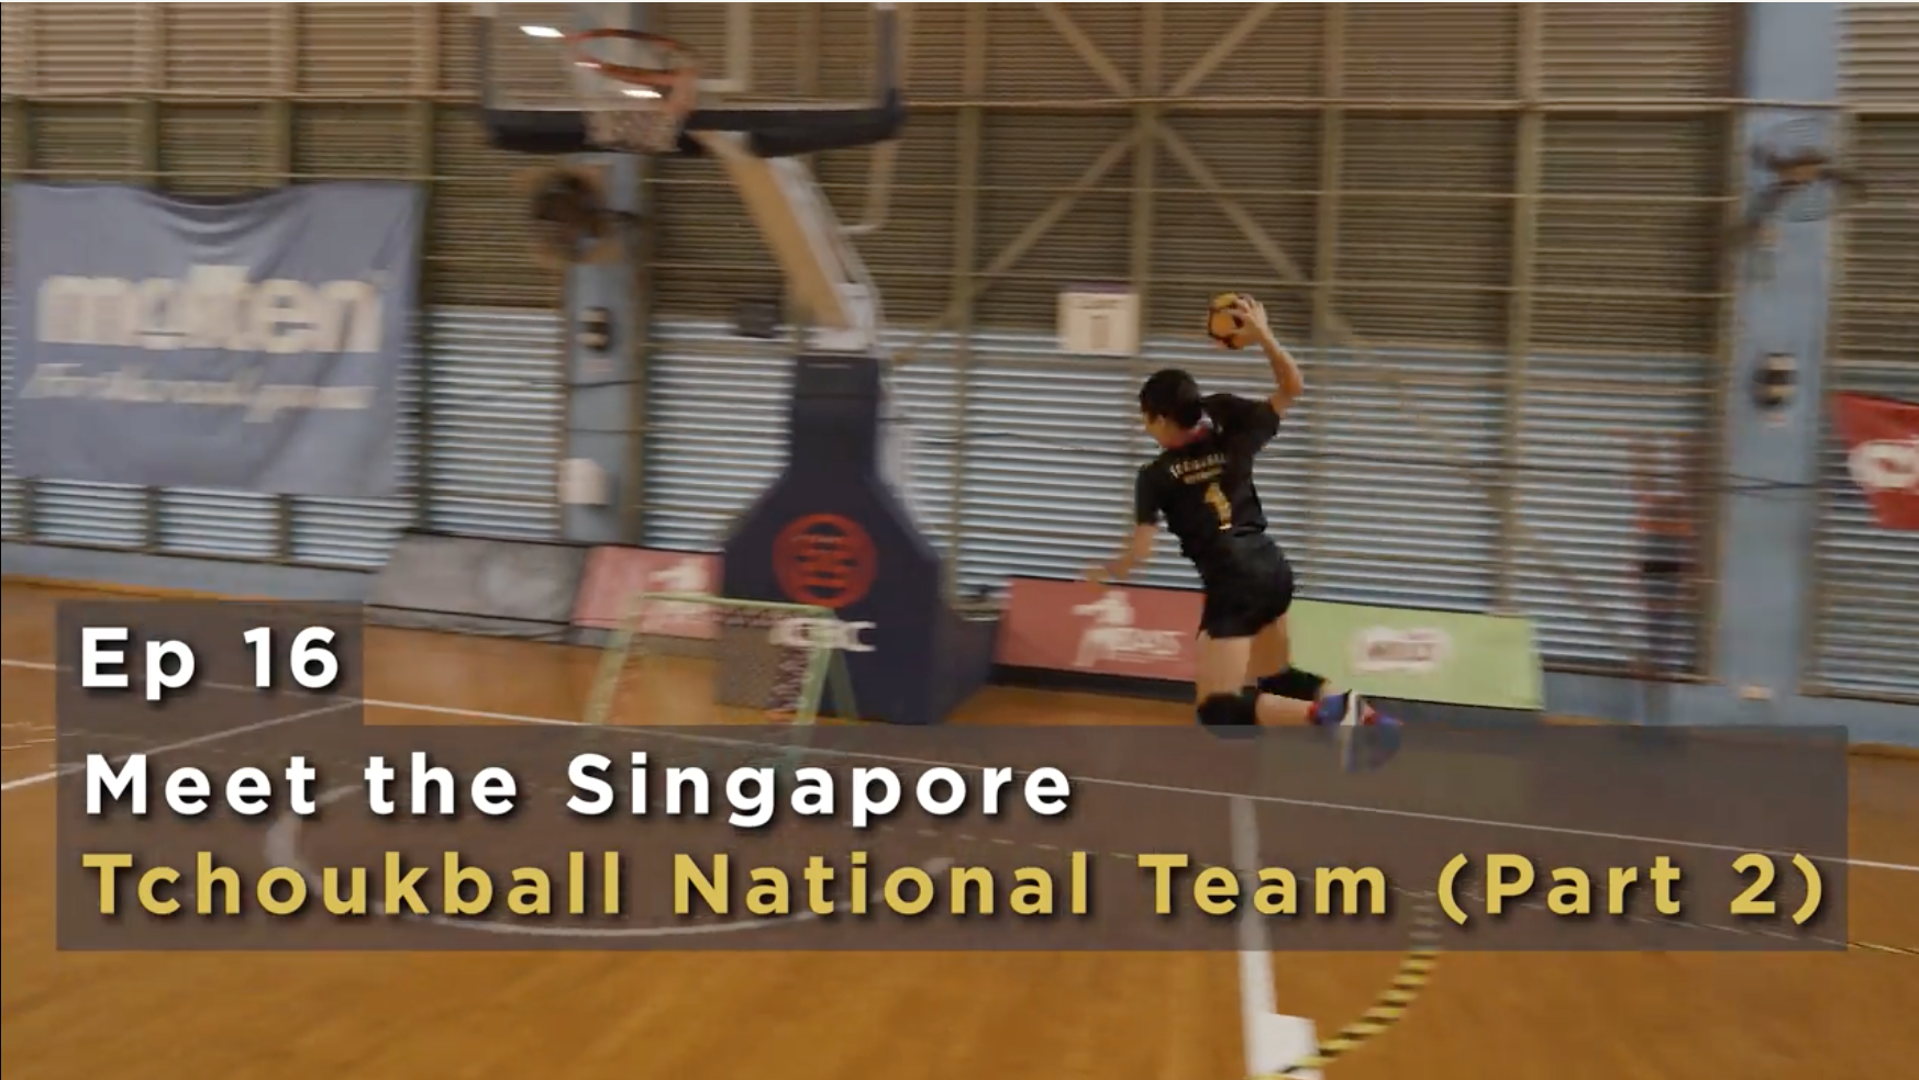 Ep 16 - Meet the Singapore Tchoukball National Team (Part 2)